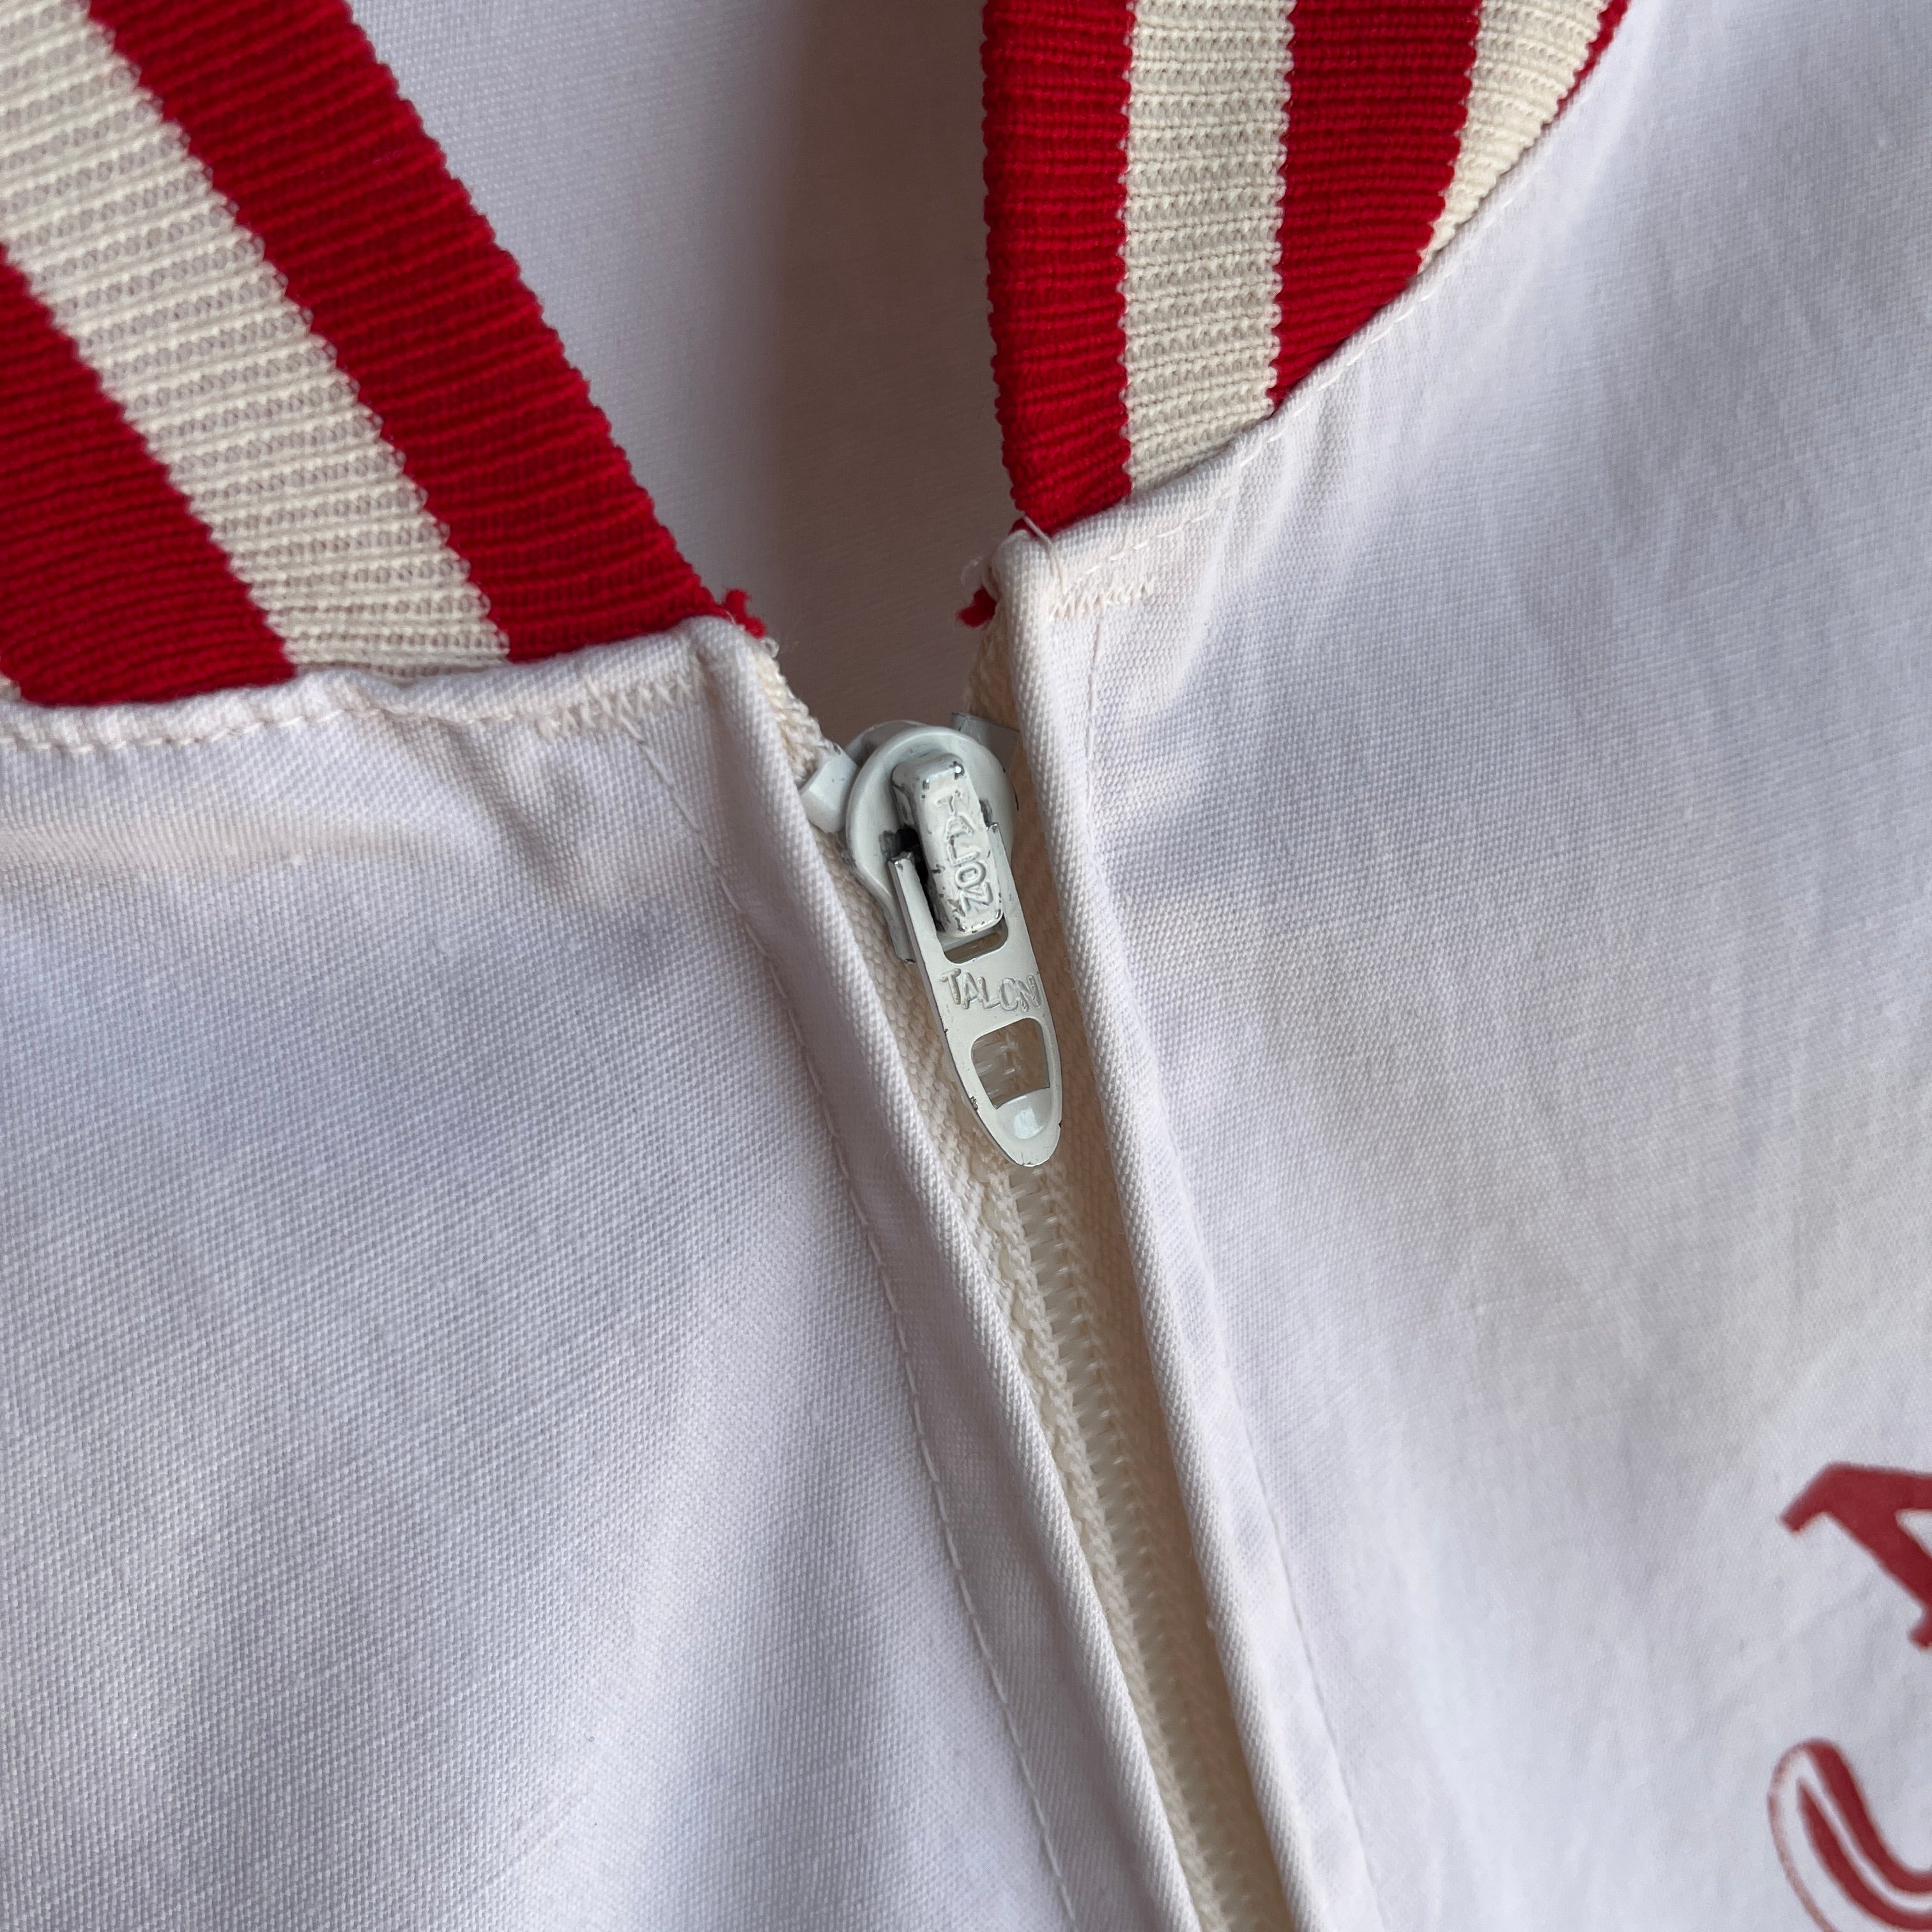 1960s Champion Brand Loyal Order of Moose Zip Up Jacket (Talon Zip) – Red  Vintage Co